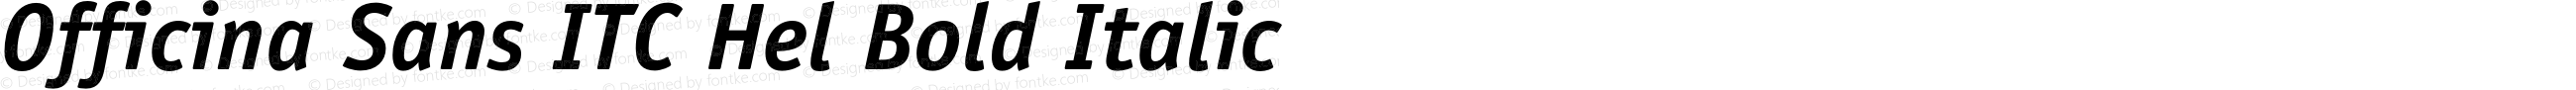 Officina Sans ITC Hel Bold Italic